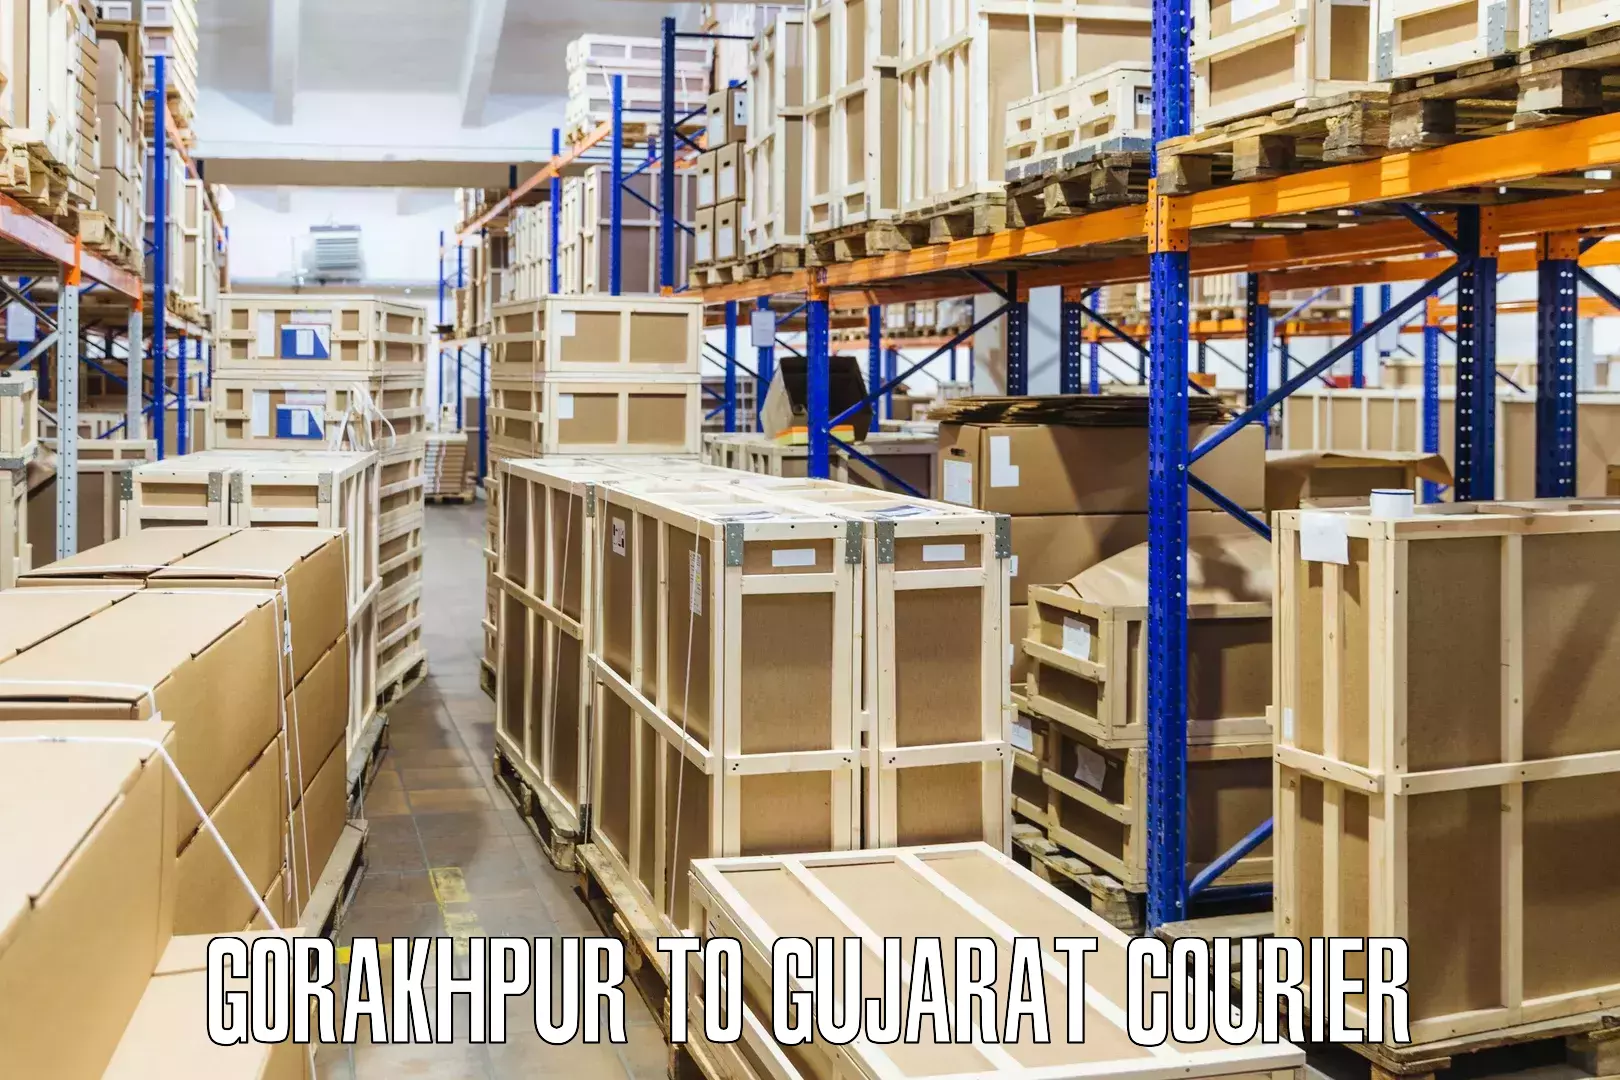 Courier app Gorakhpur to Gujarat